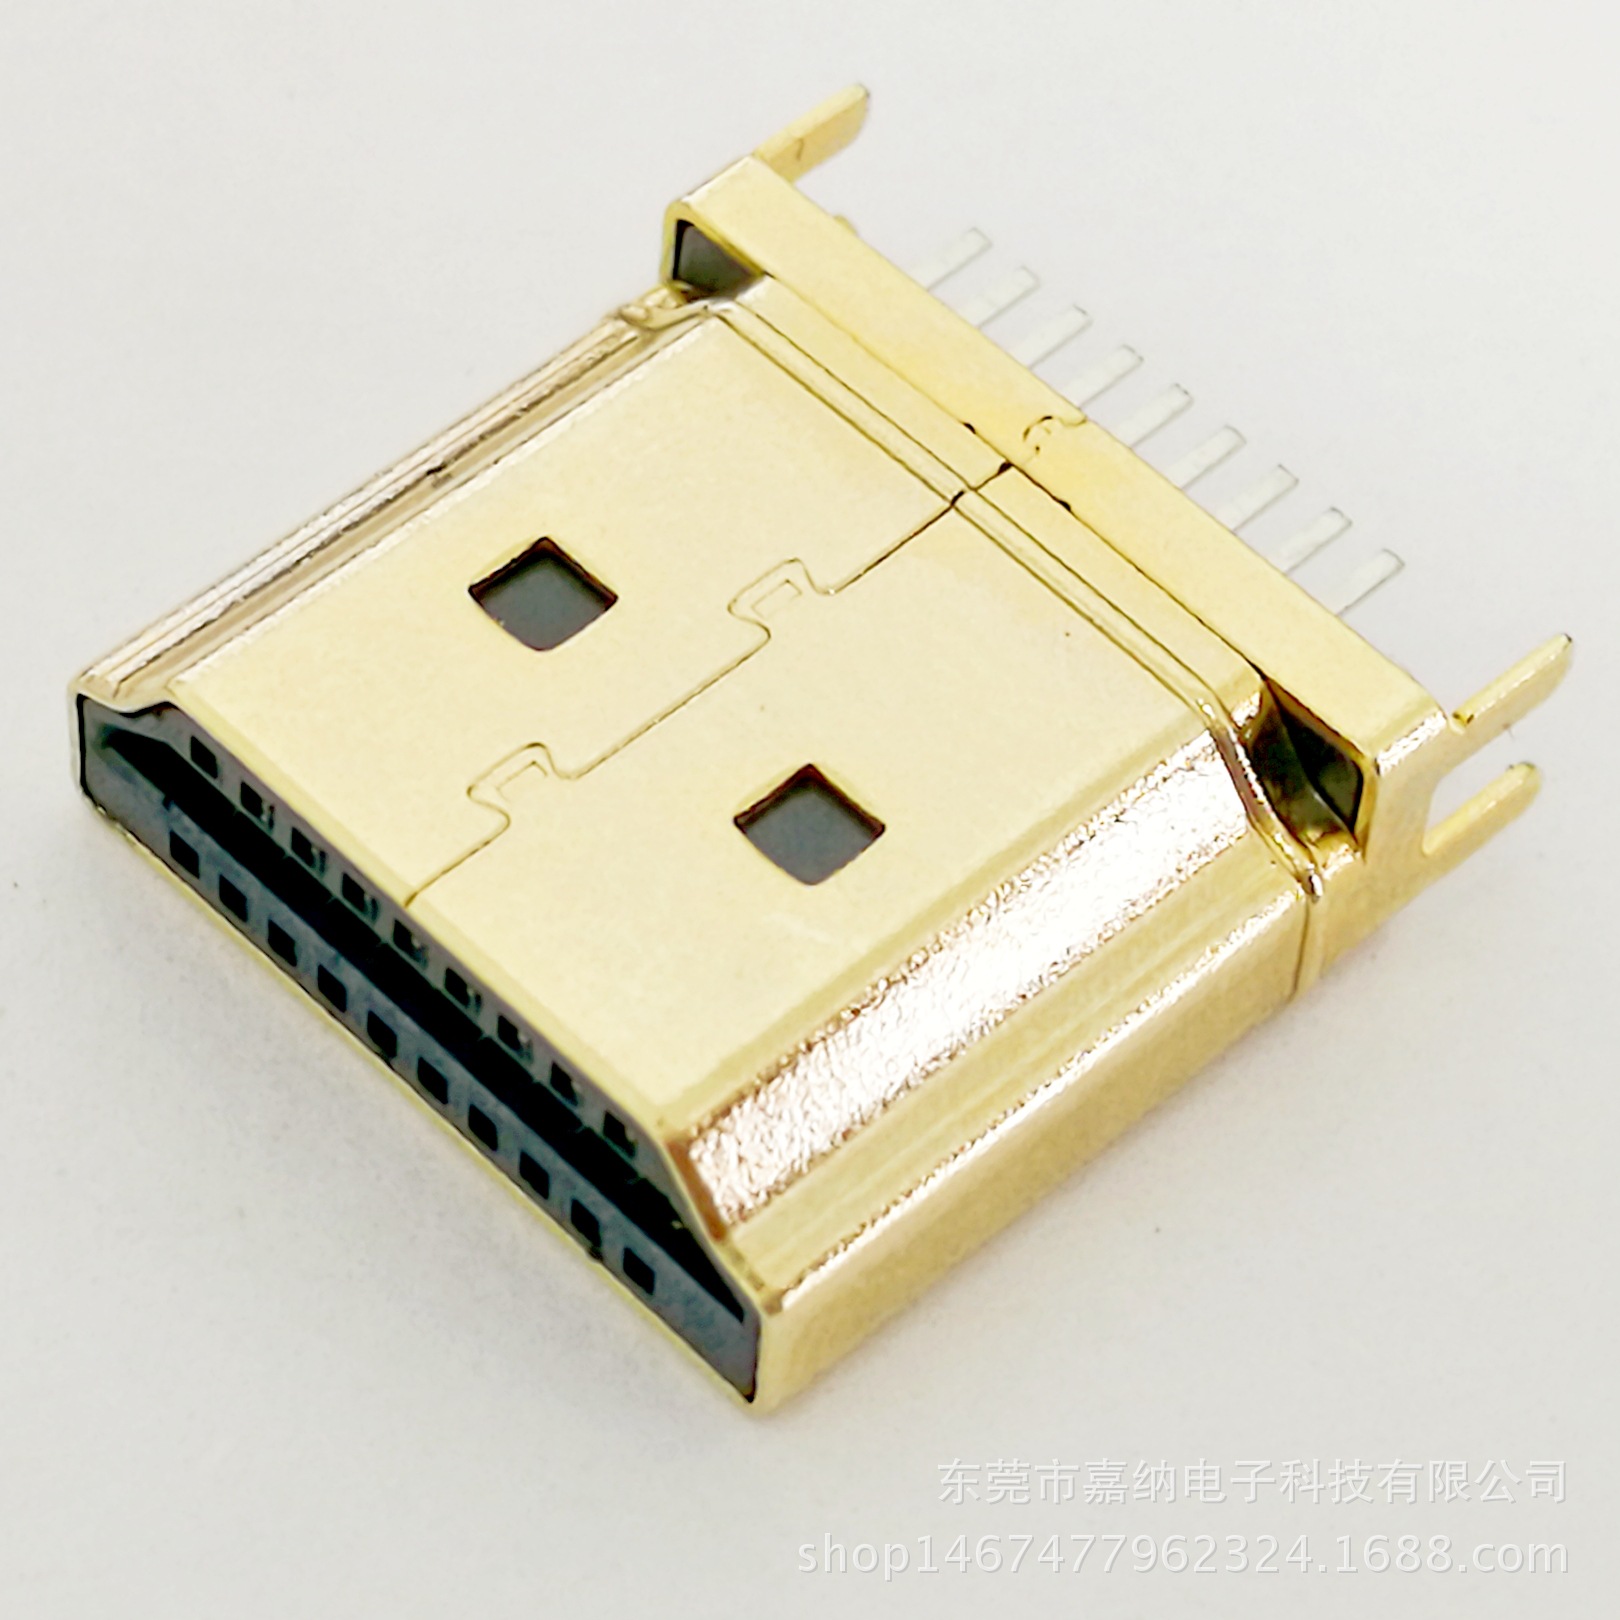 HDMI 19PIN夹板式1.6间距插头高清连接器铜铁壳镀金